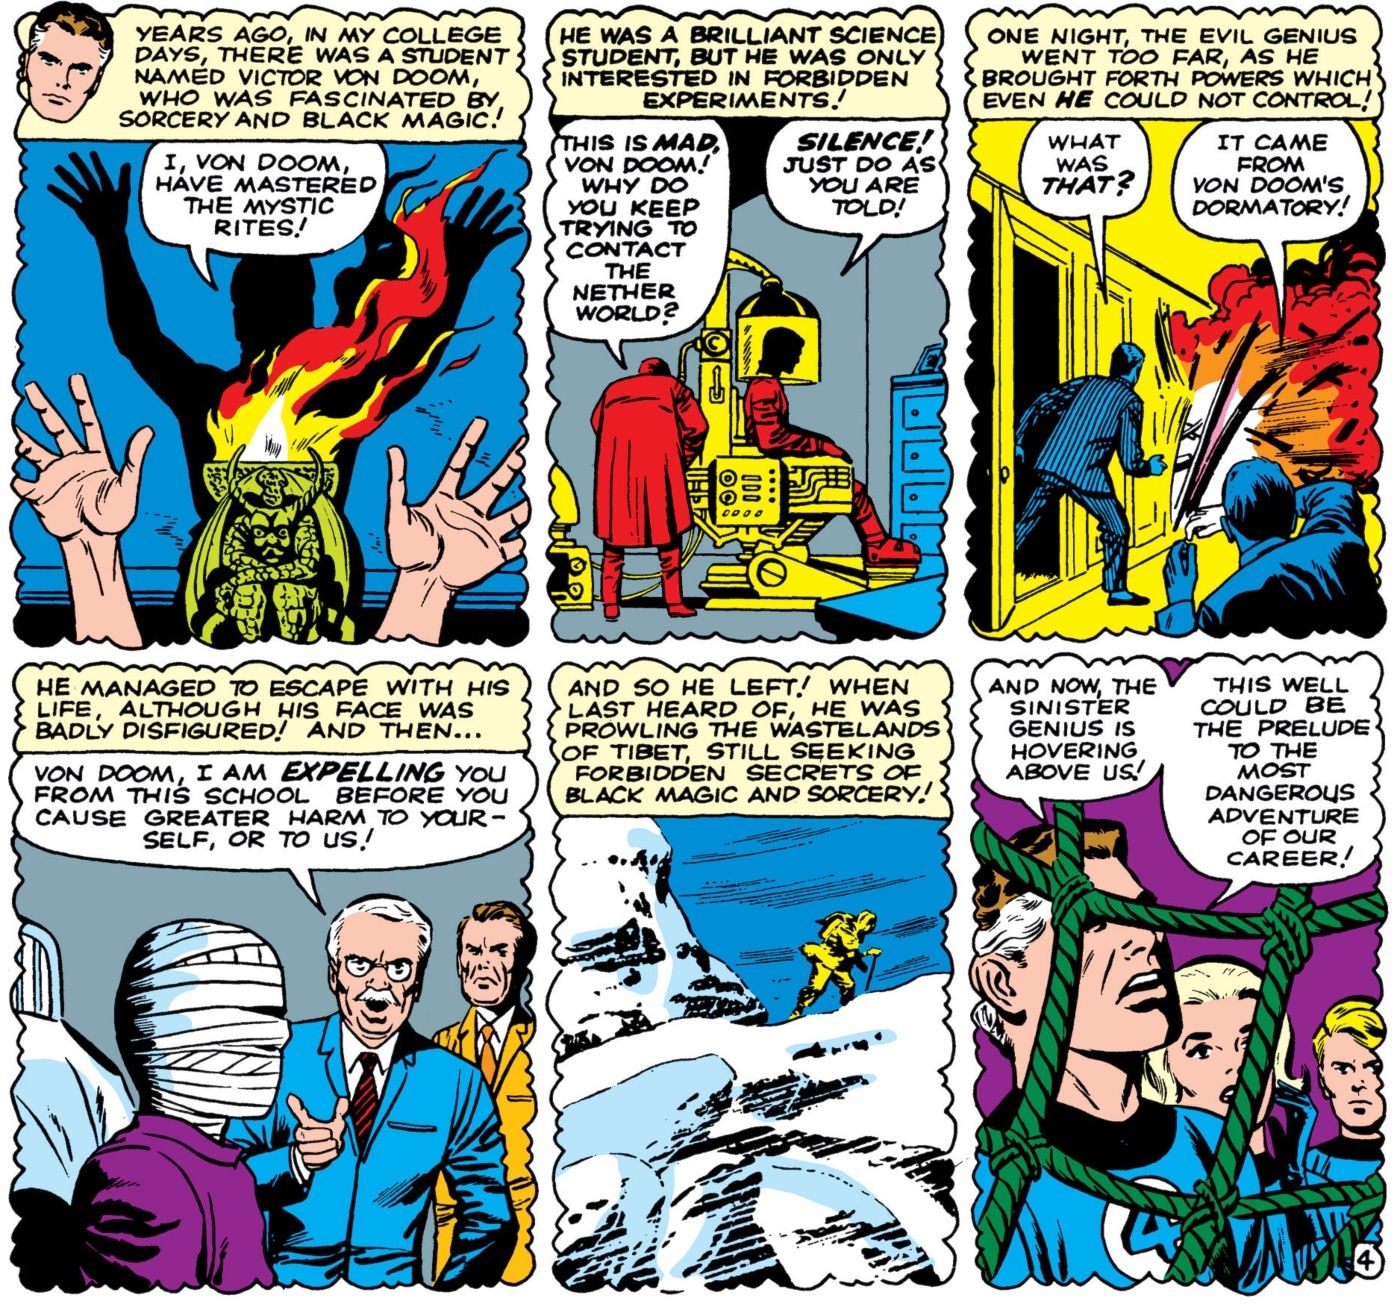 The origin story of Doctor Doom in Fantastic Four.